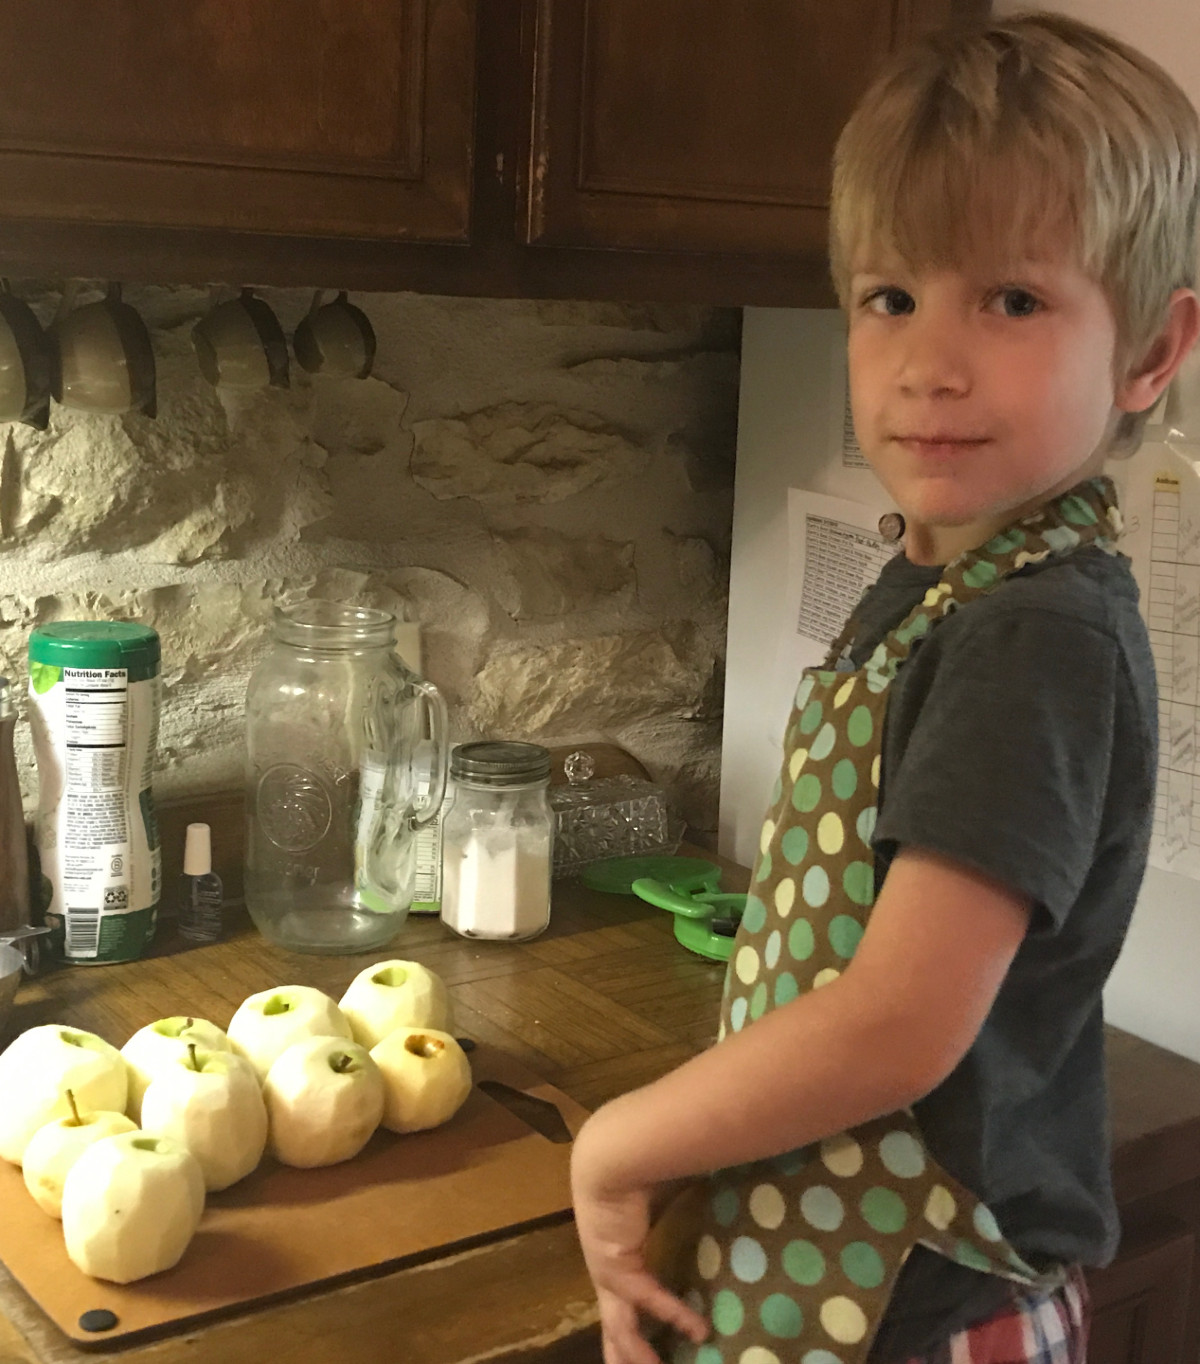 Young boy peeling apples looking at camera